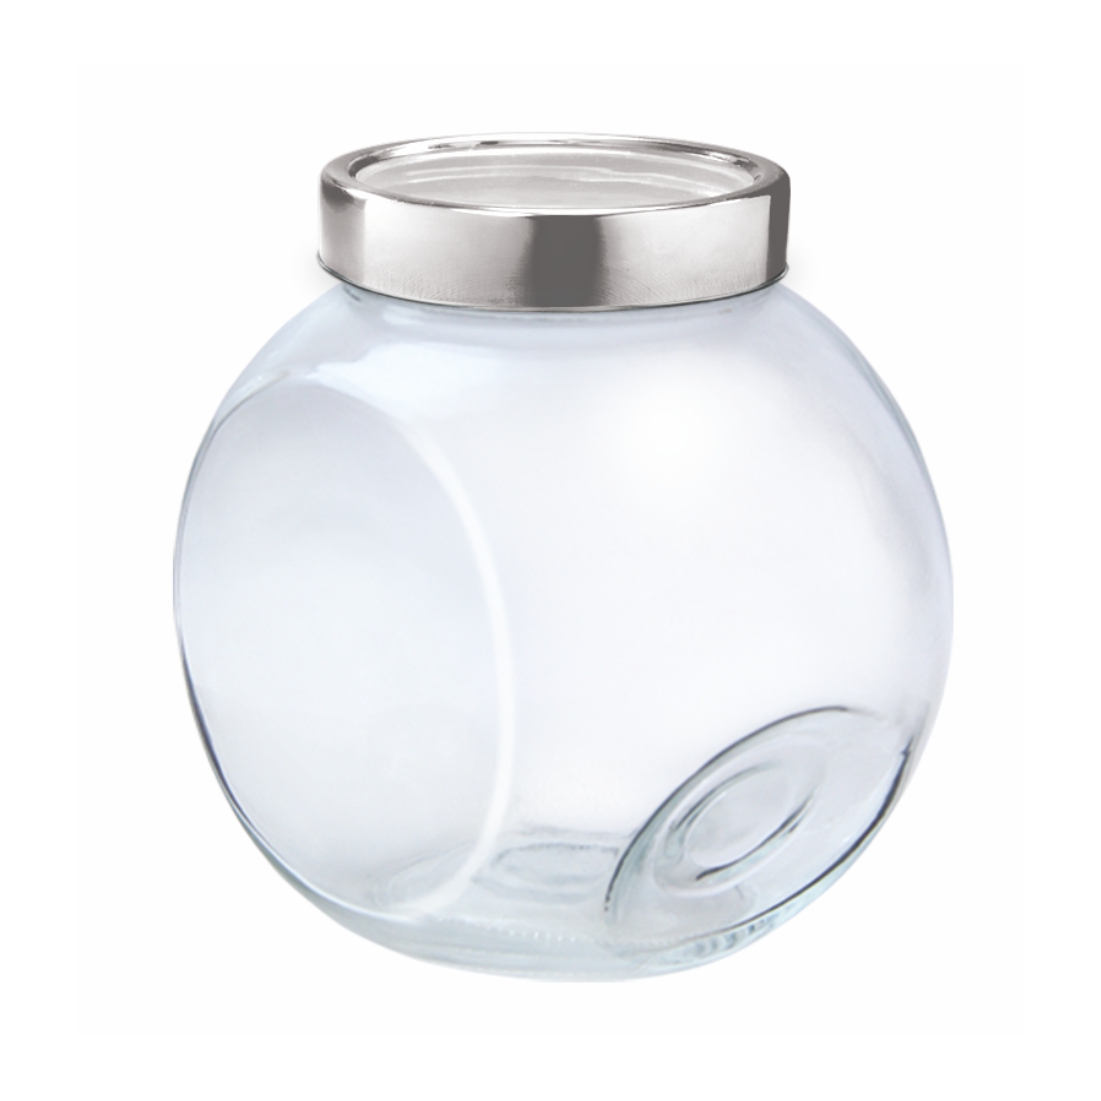 Treo Eazy Pick Glass Jar